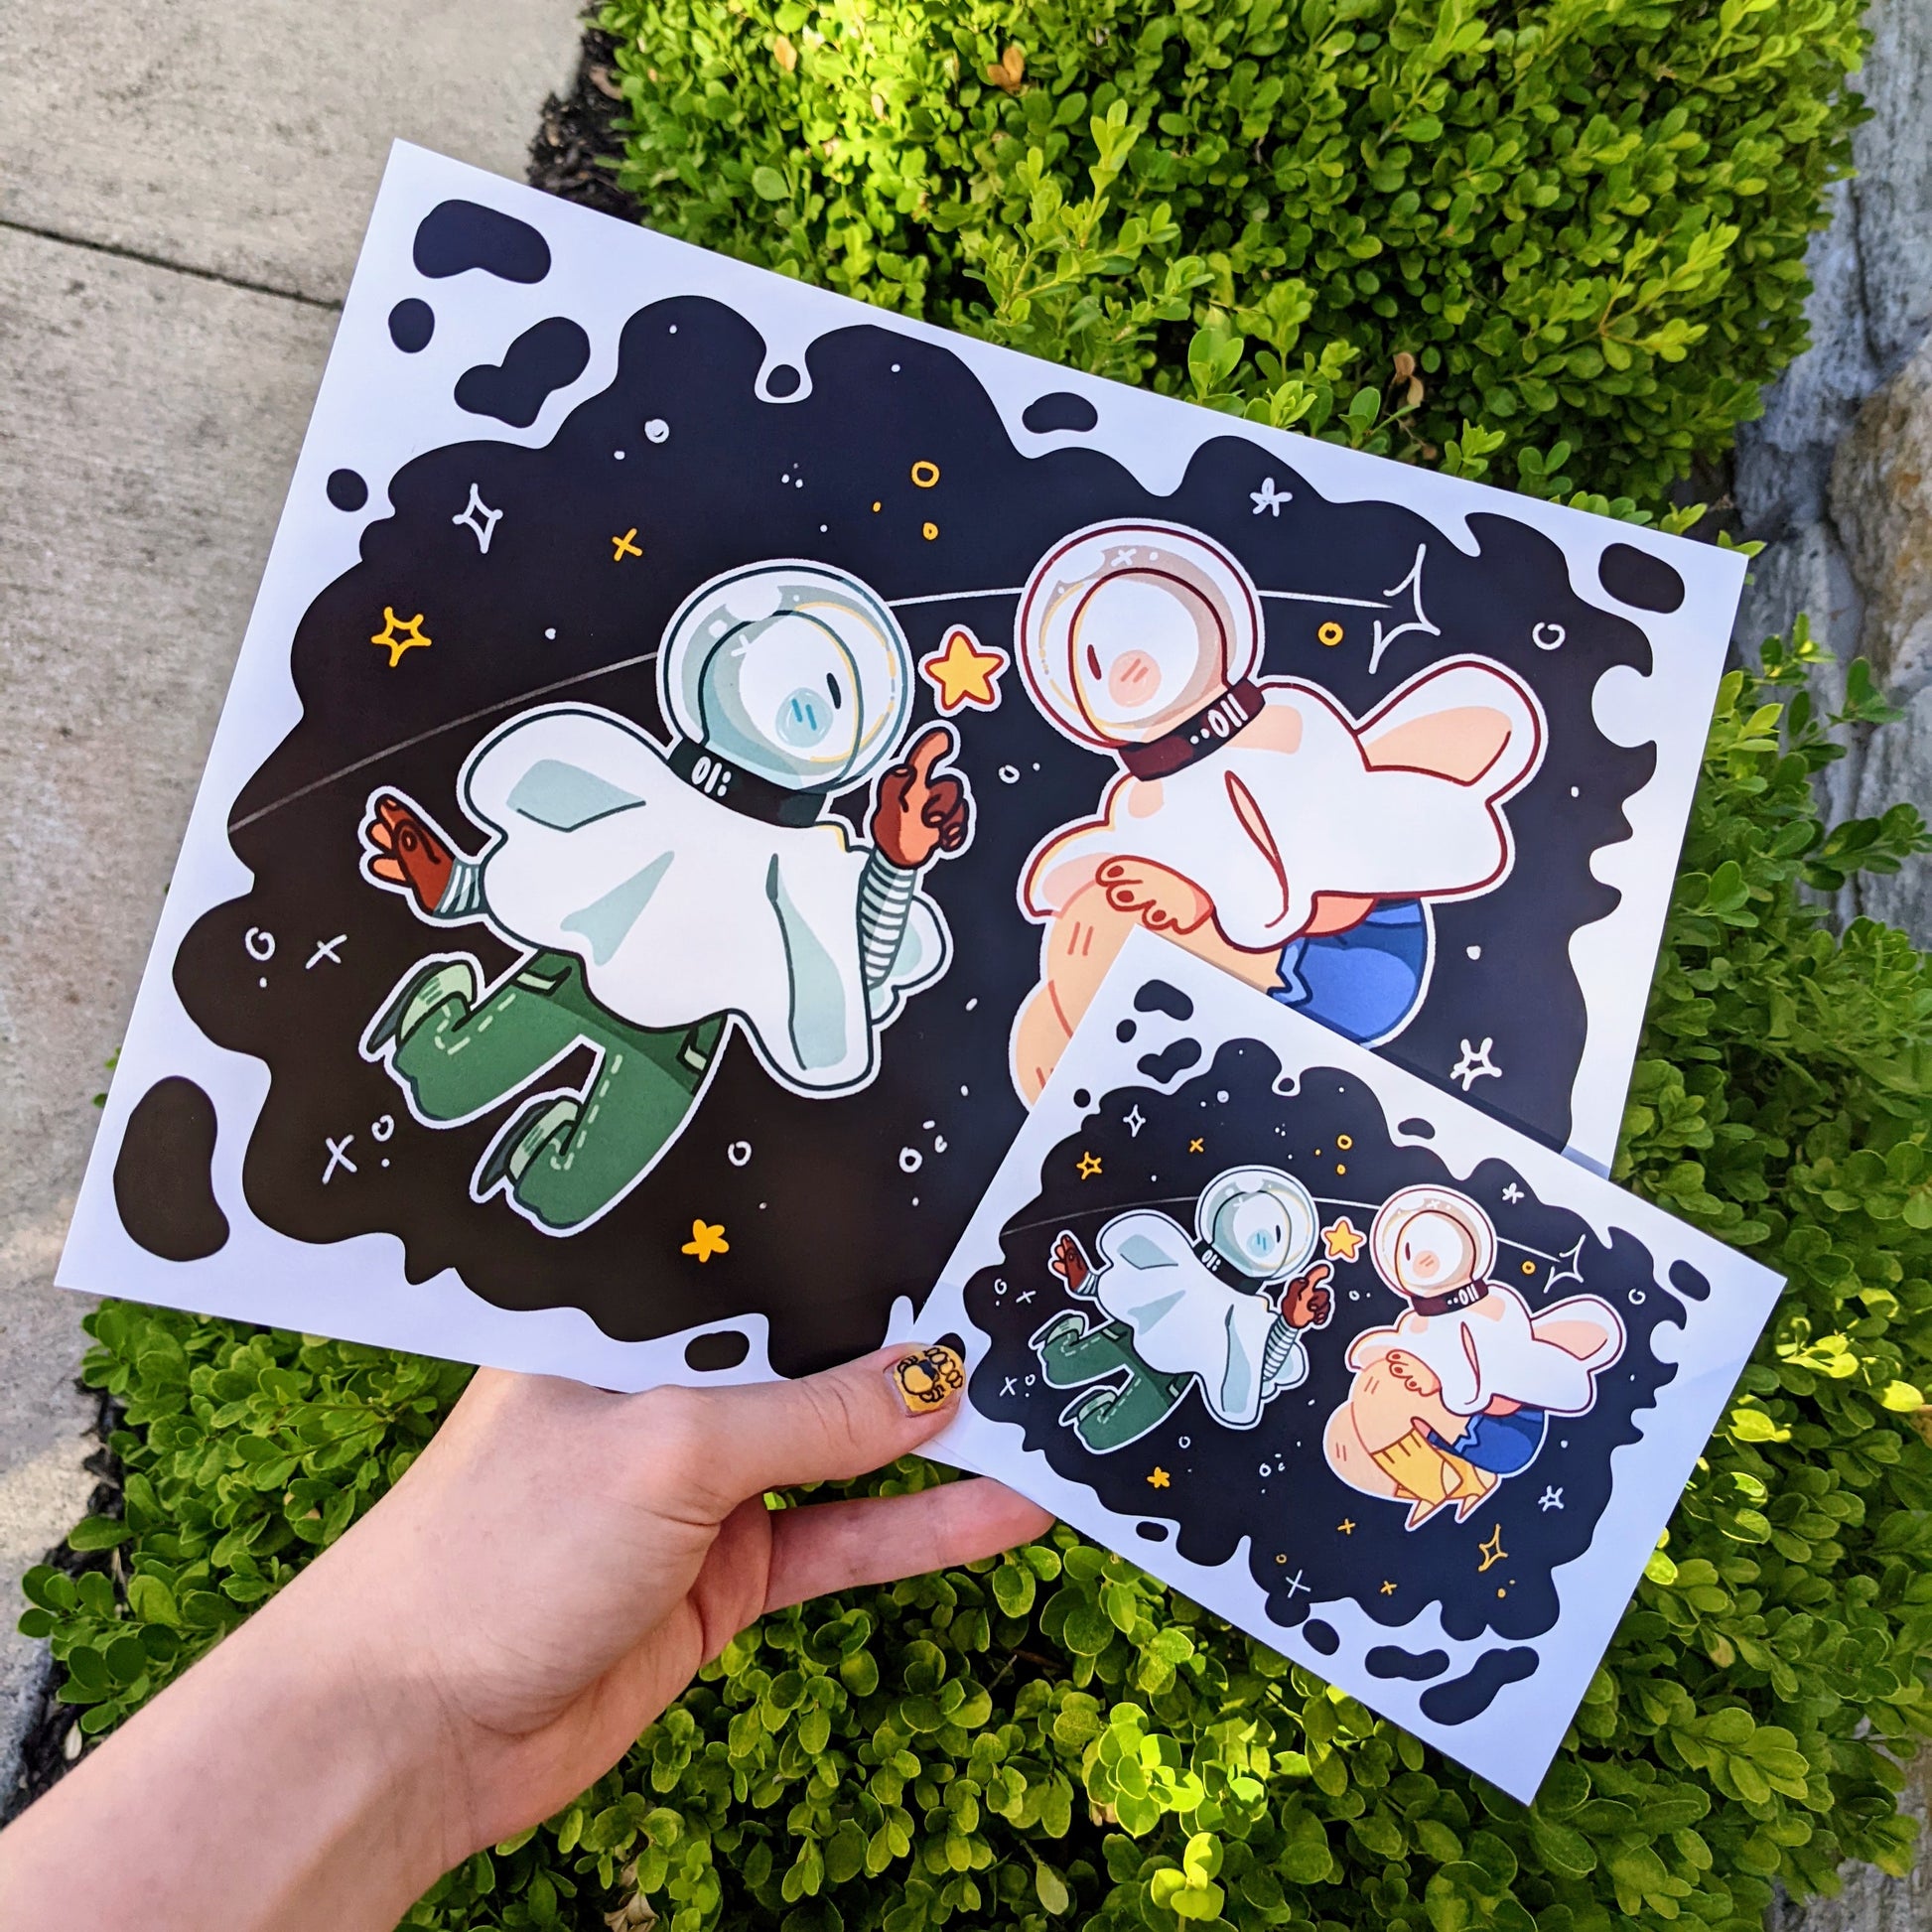 Mini Space Ghost Print 4x5 Glossy Print - MilkyTomato